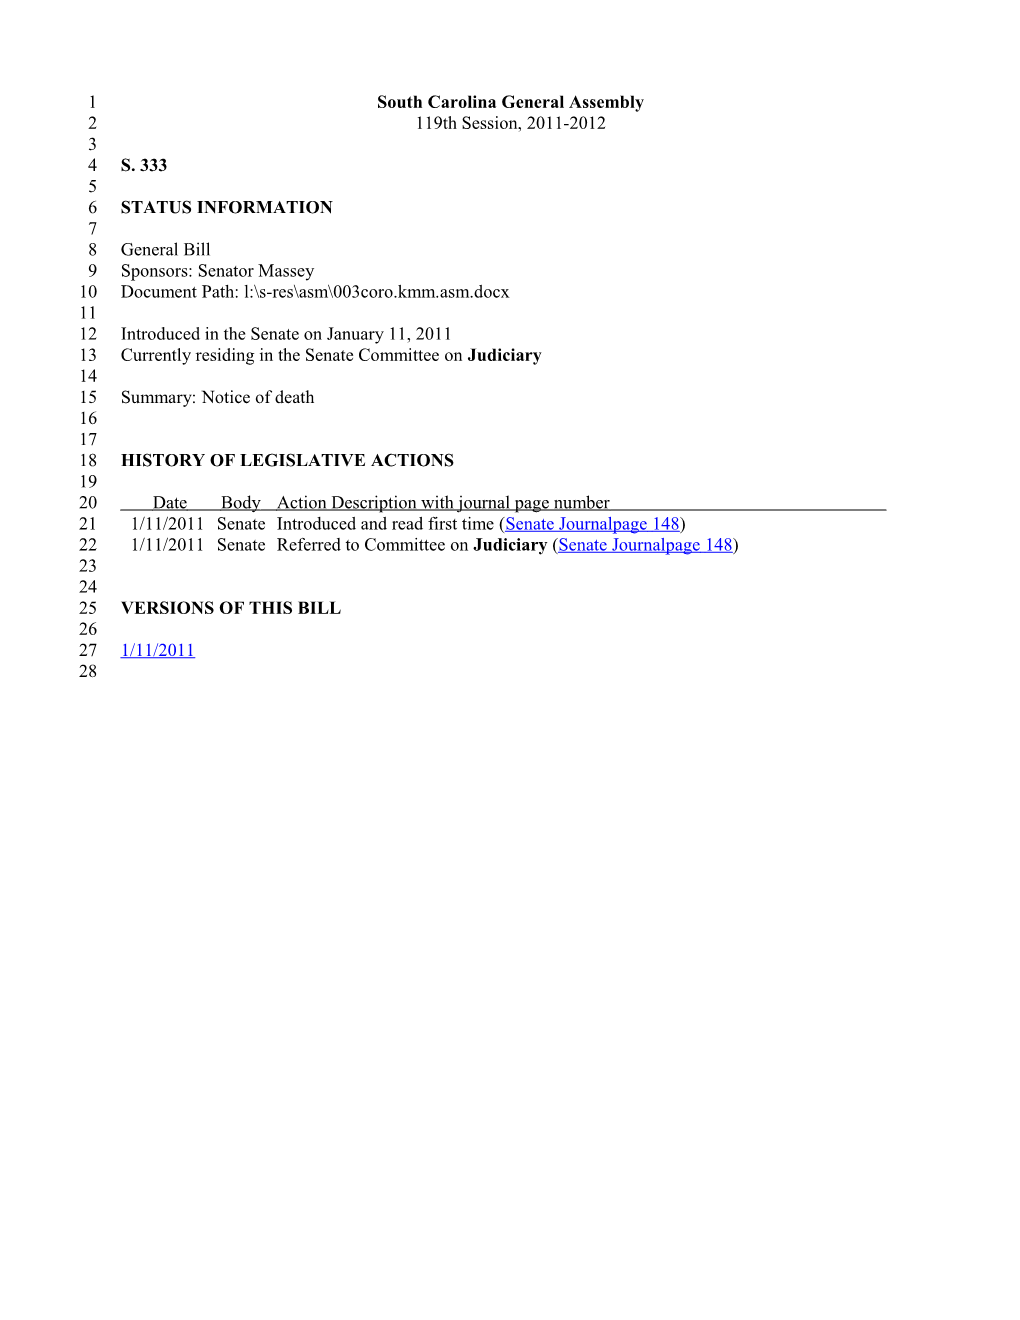 2011-2012 Bill 333: Notice of Death - South Carolina Legislature Online